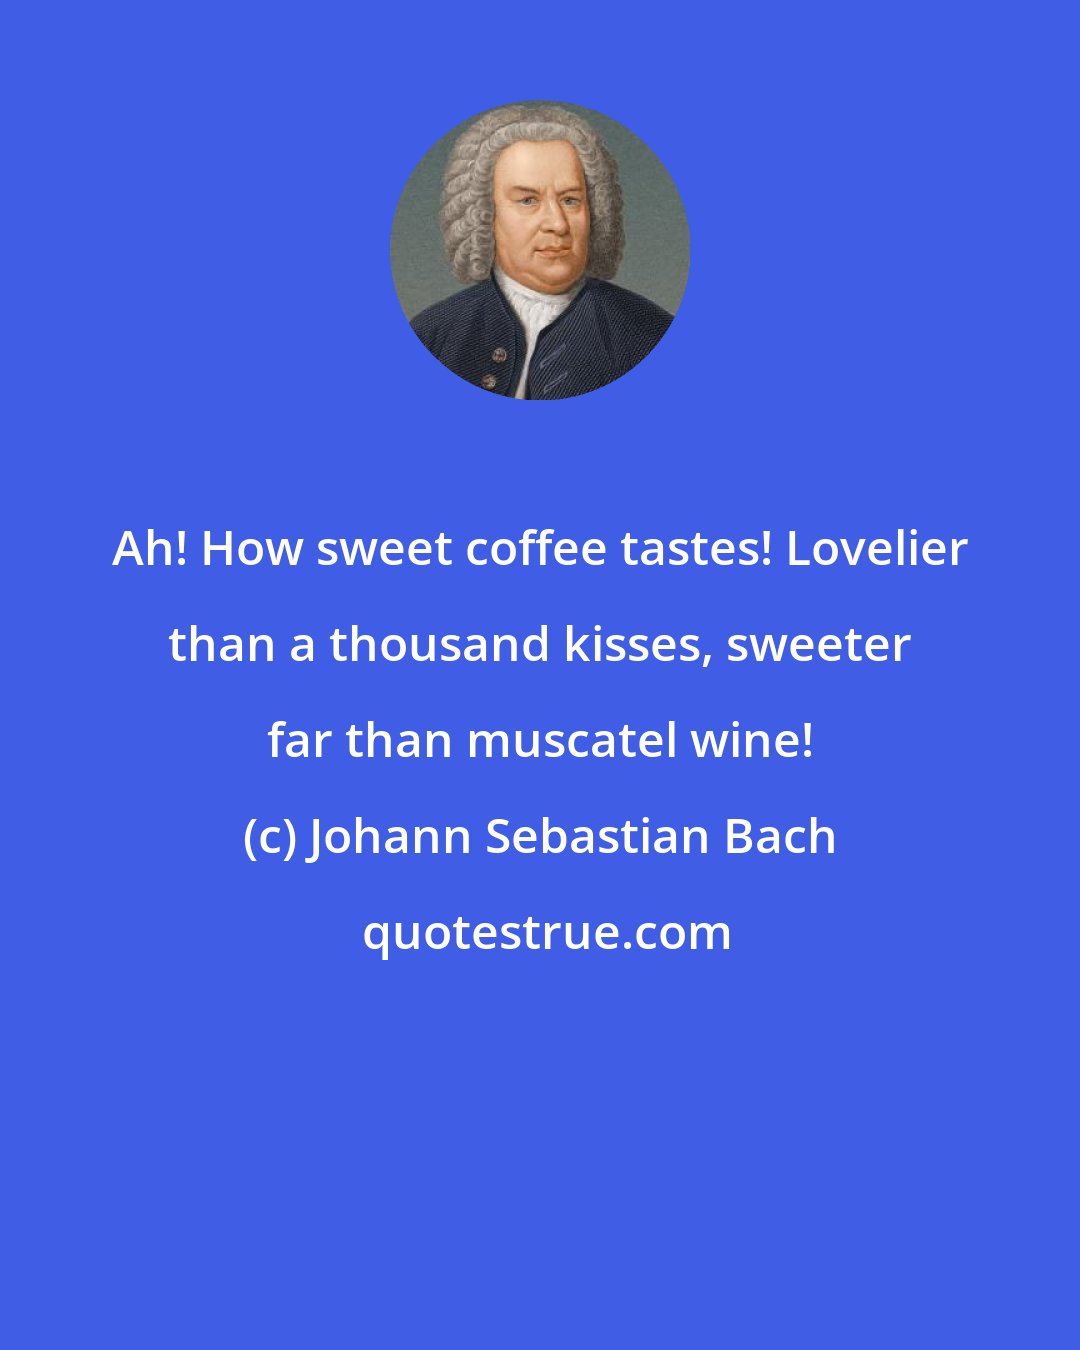 Johann Sebastian Bach: Ah! How sweet coffee tastes! Lovelier than a thousand kisses, sweeter far than muscatel wine!